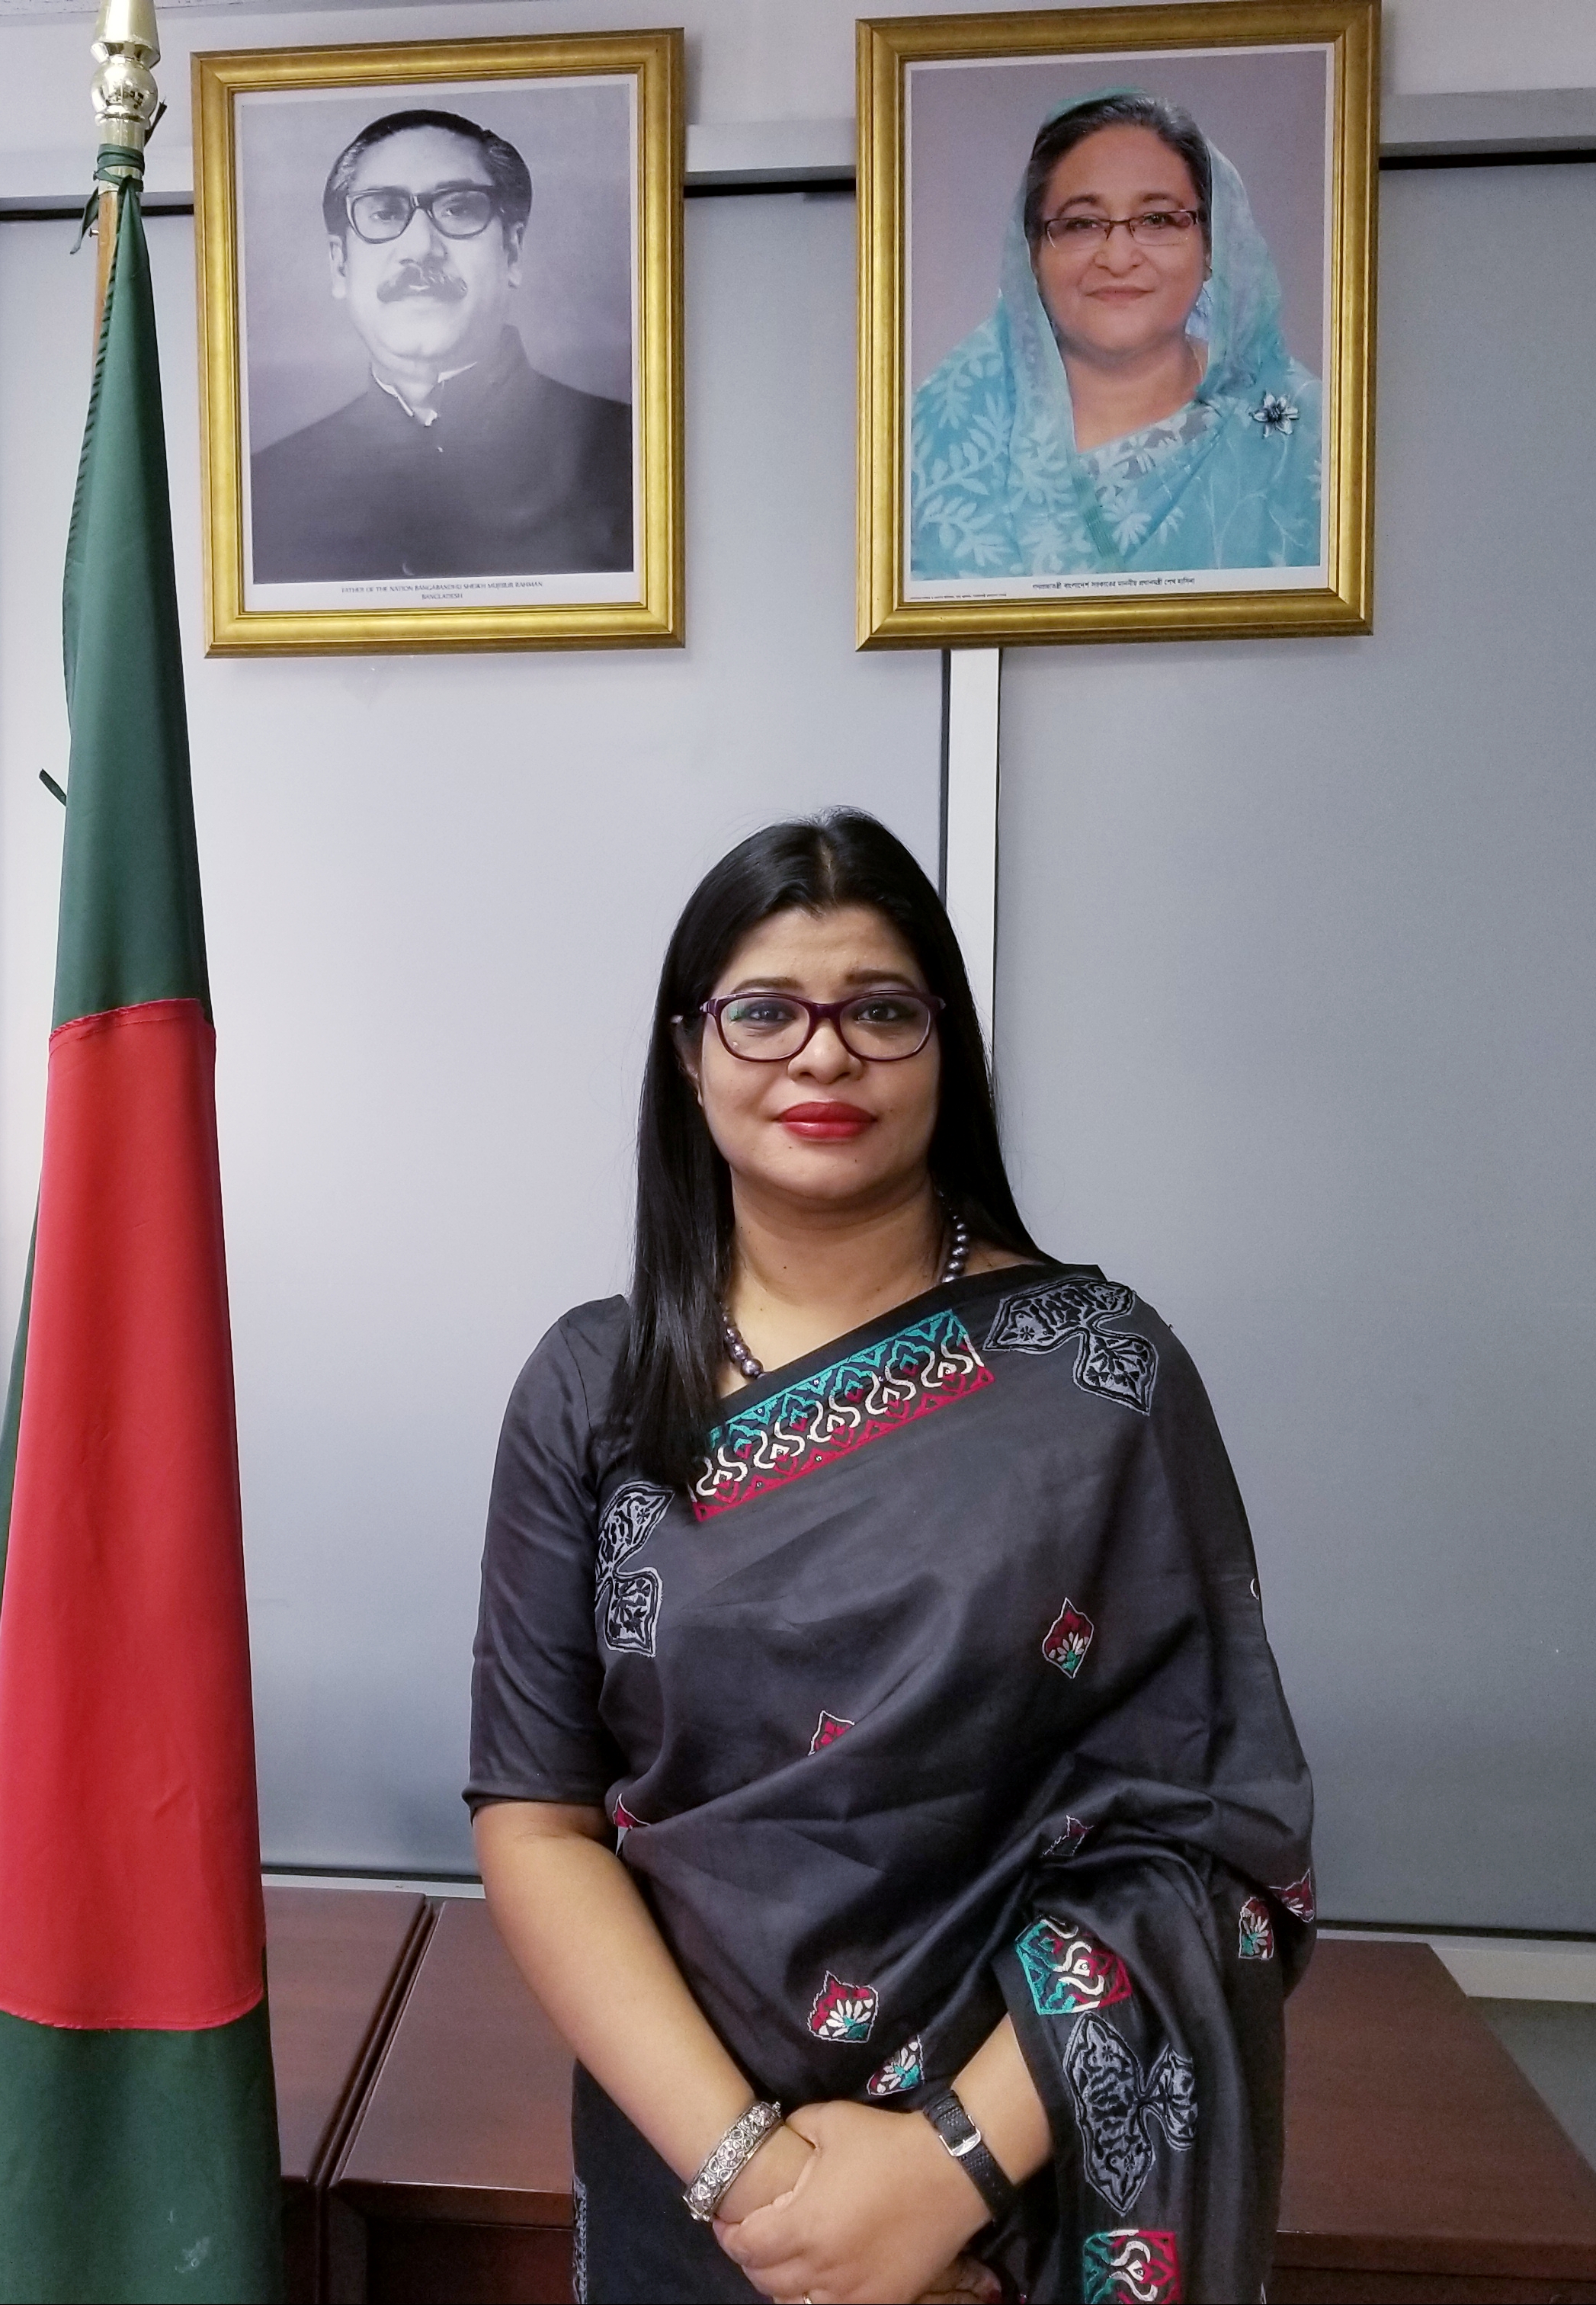 Eid greetings from Ms. Sadia Faizunnesa, Consul General of Bangladesh in New York (Video)